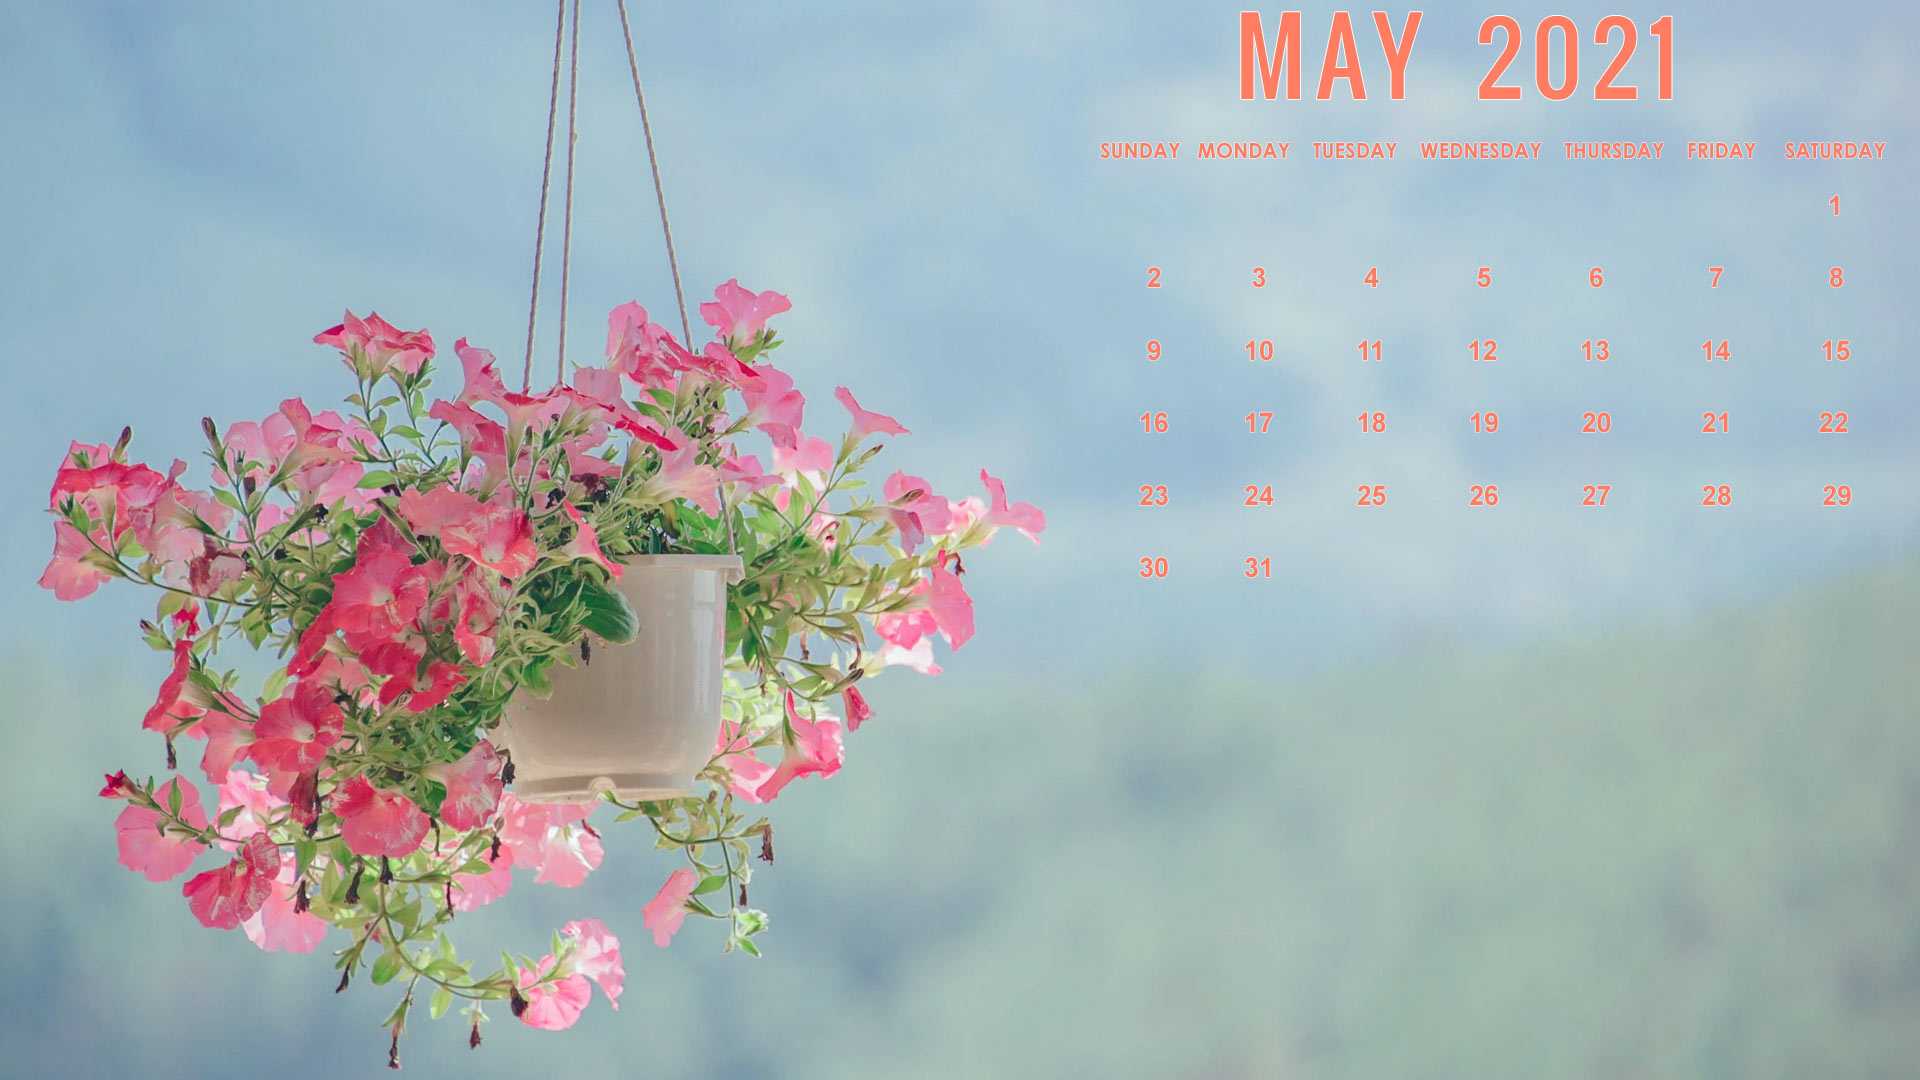 2021 May Calendar Wallpaper KoLPaPer Awesome Free HD Wallpapers